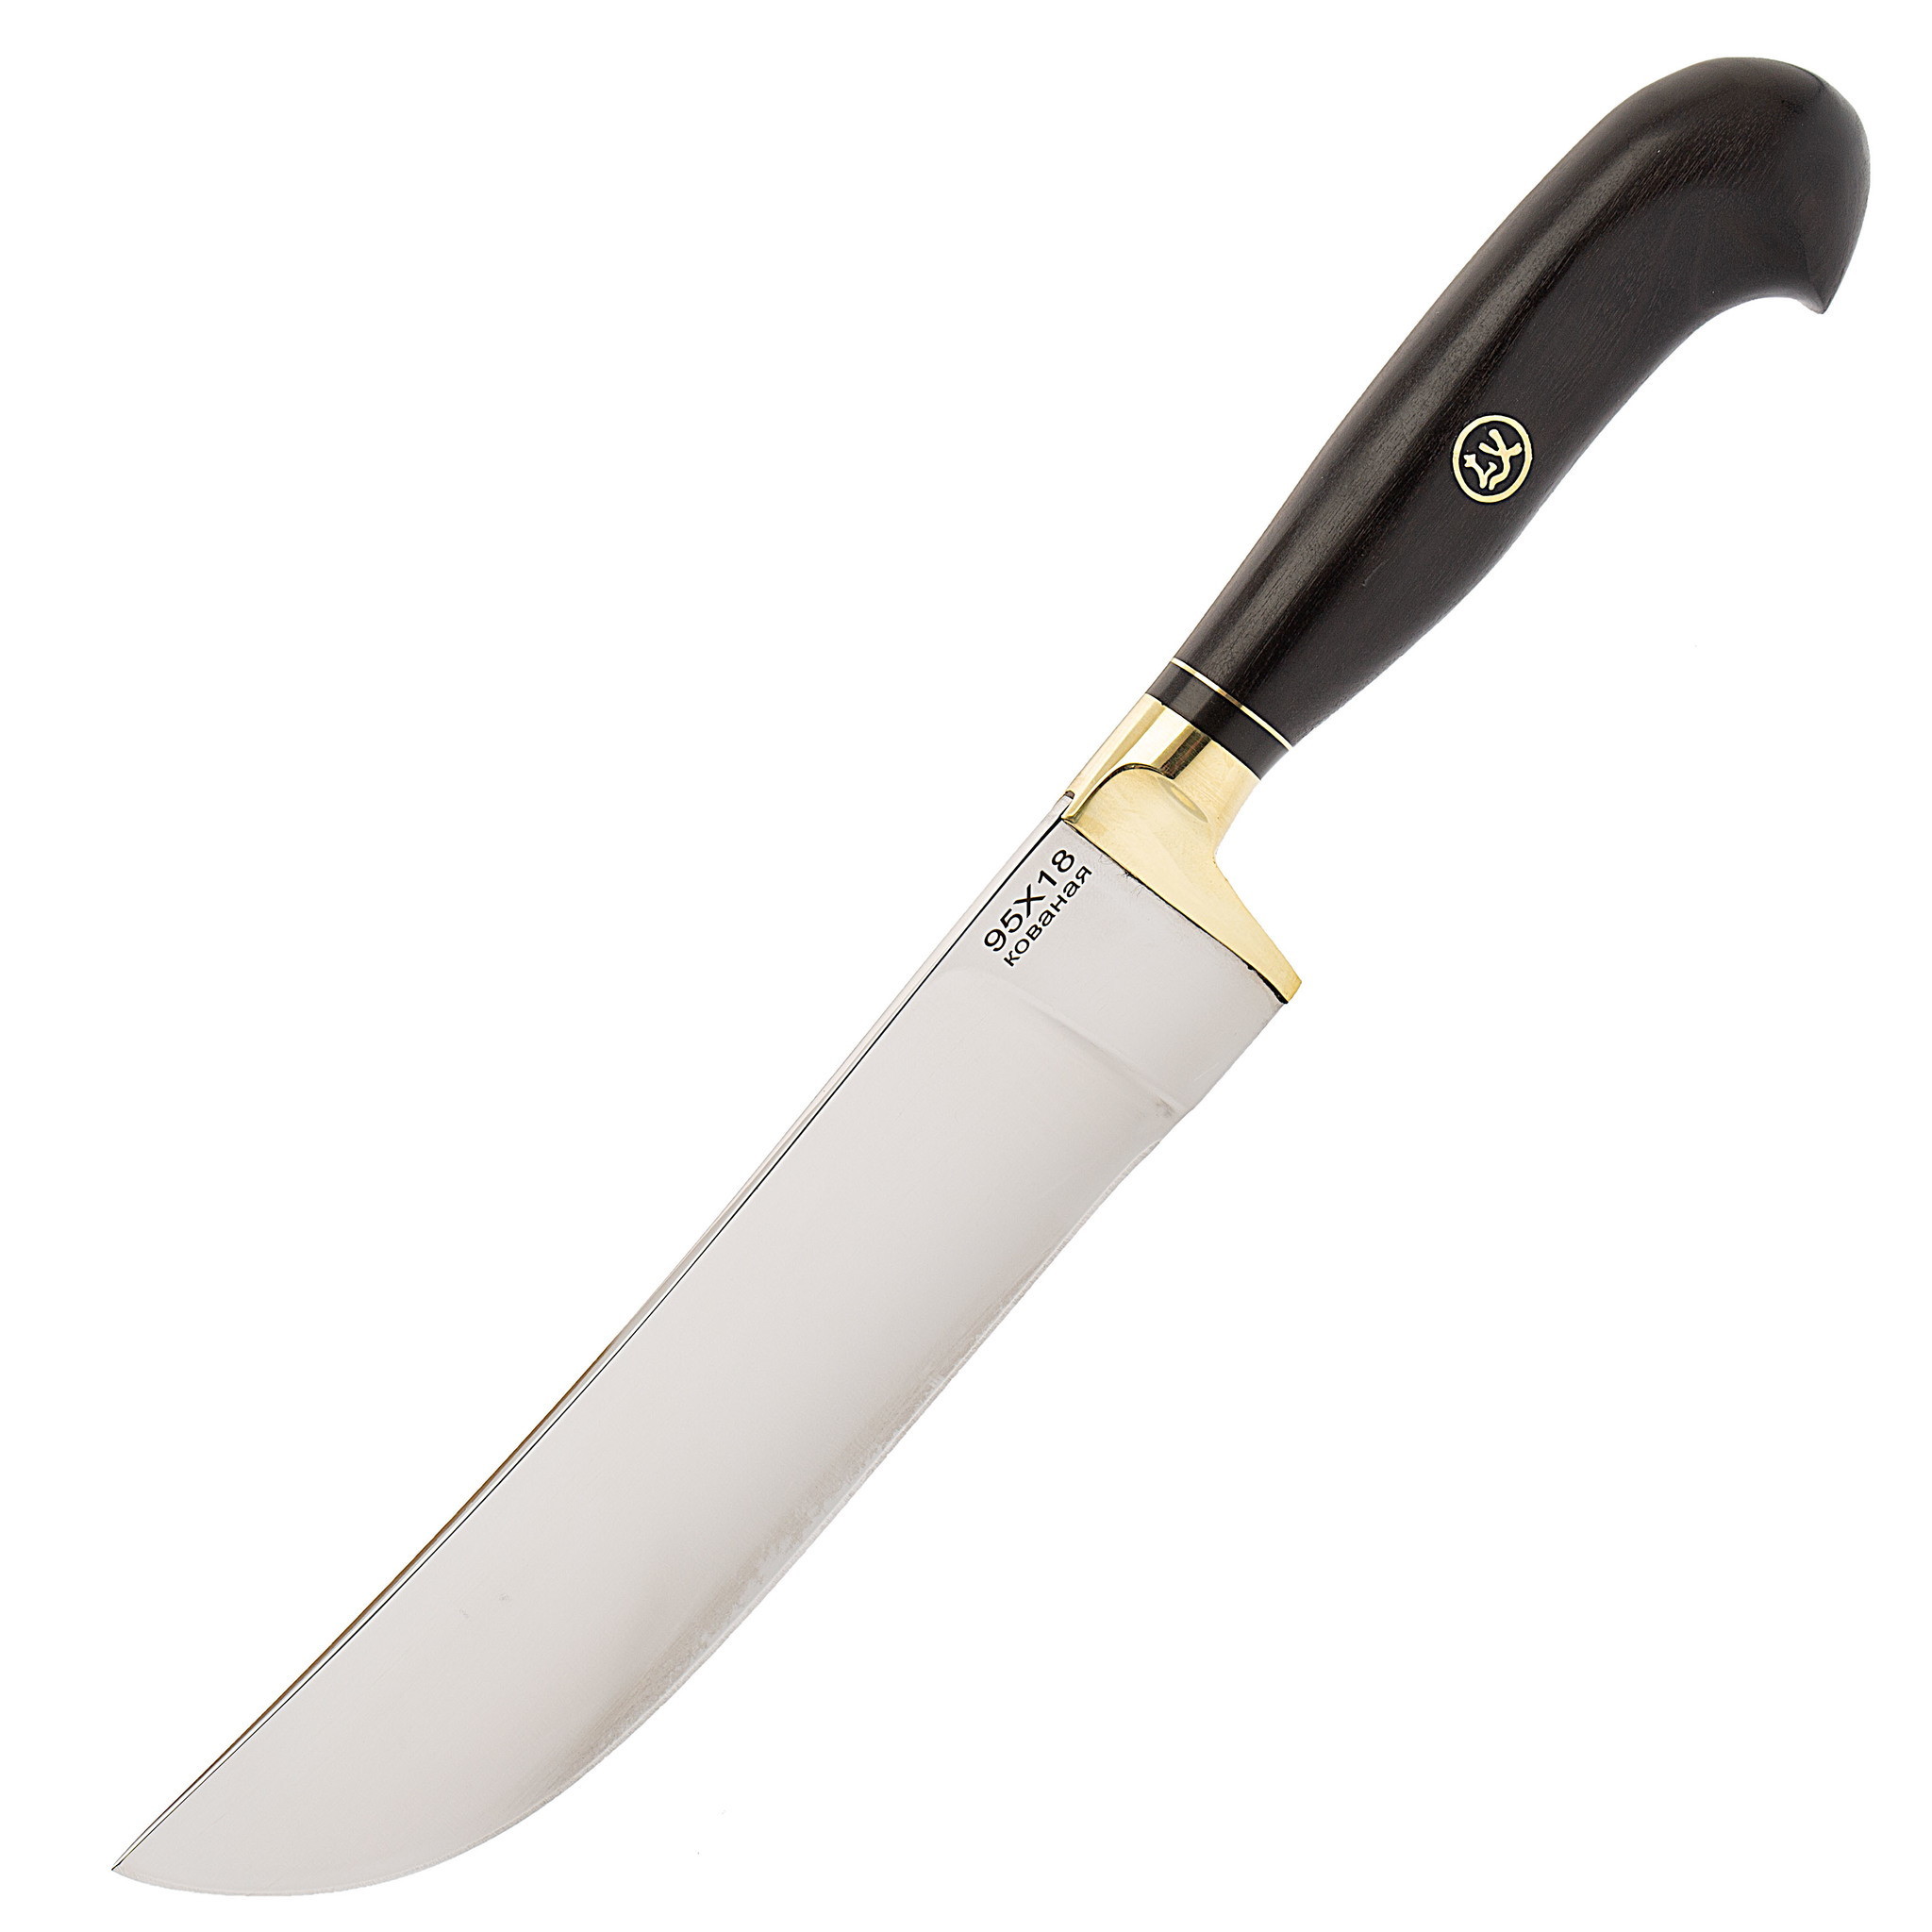 Нож Узбекский, сталь 95х18, граб финка нквд сталь 95х18 граб